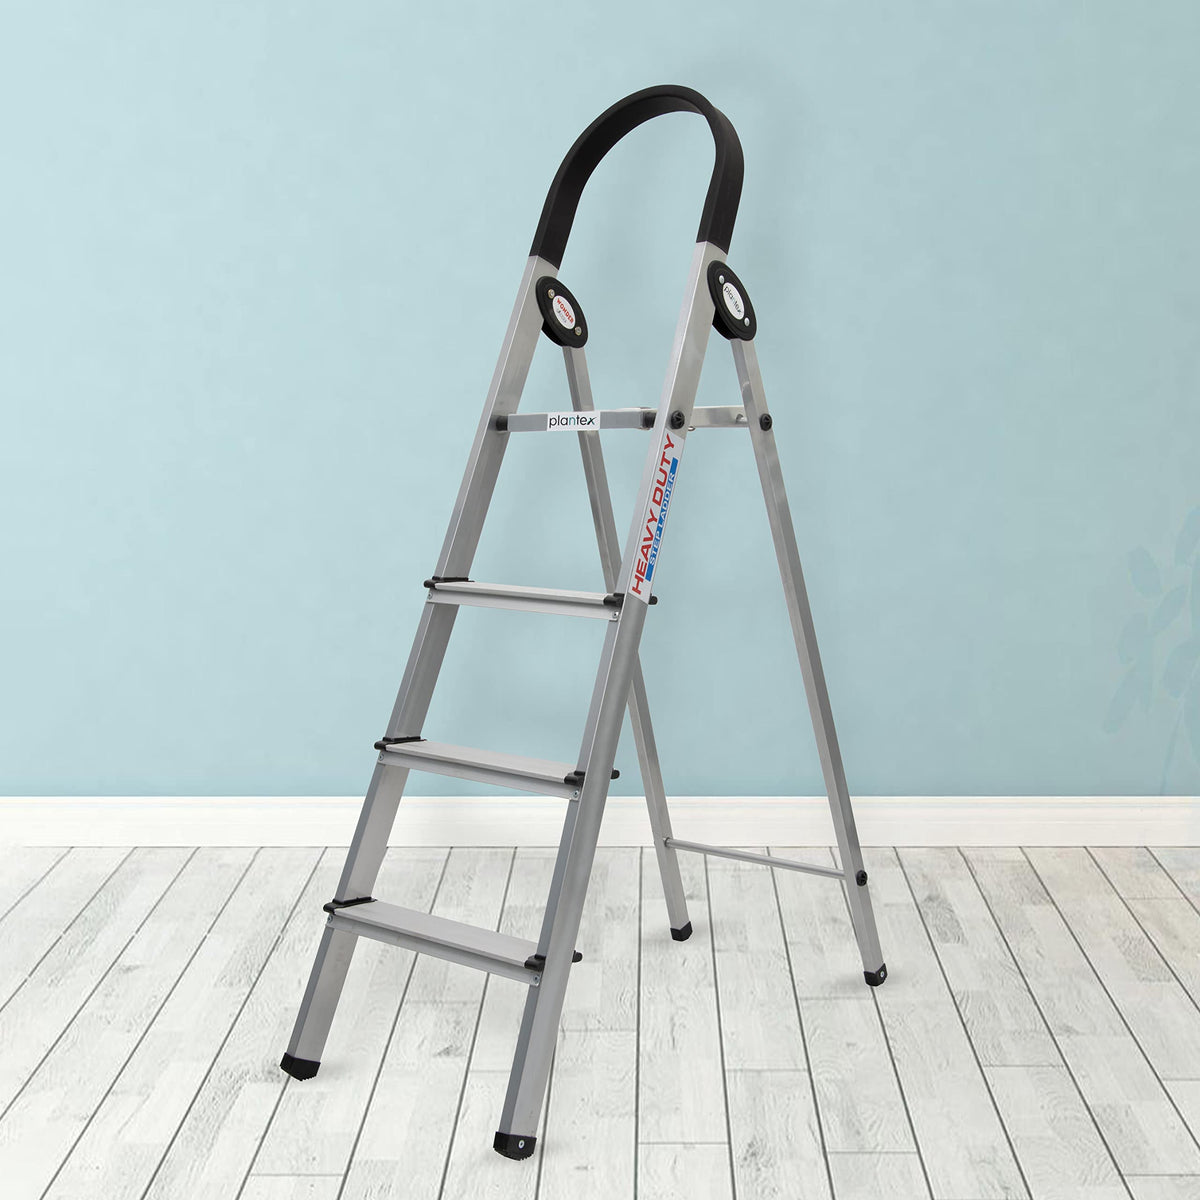 Plantex Wonder Aluminium Step Folding Ladder 4 Step for Home with Advanced Locking System - 4 Step Ladder (Silver & Black)